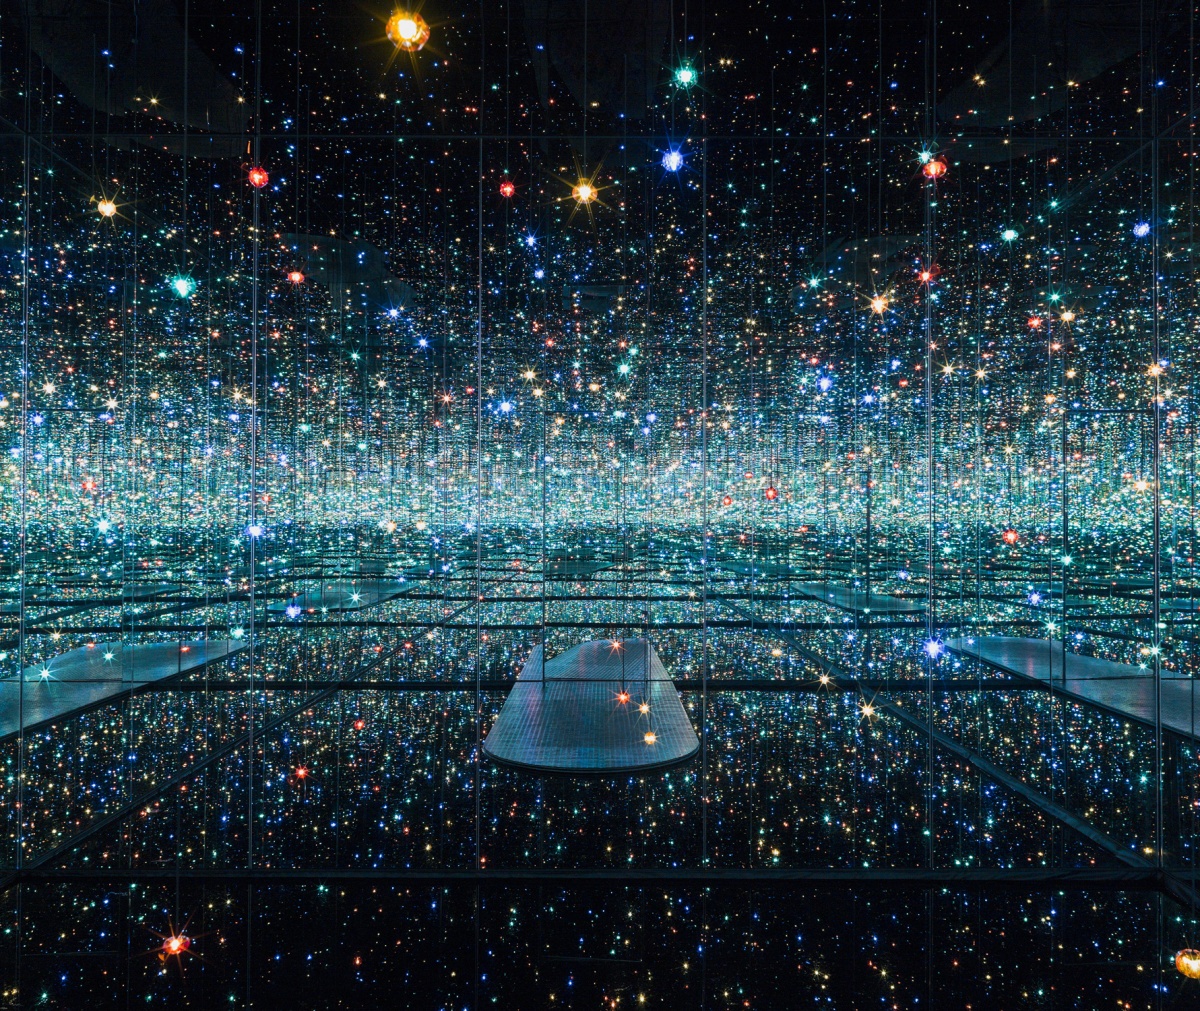 Infinity Mirror Room de Yayoi Kusama